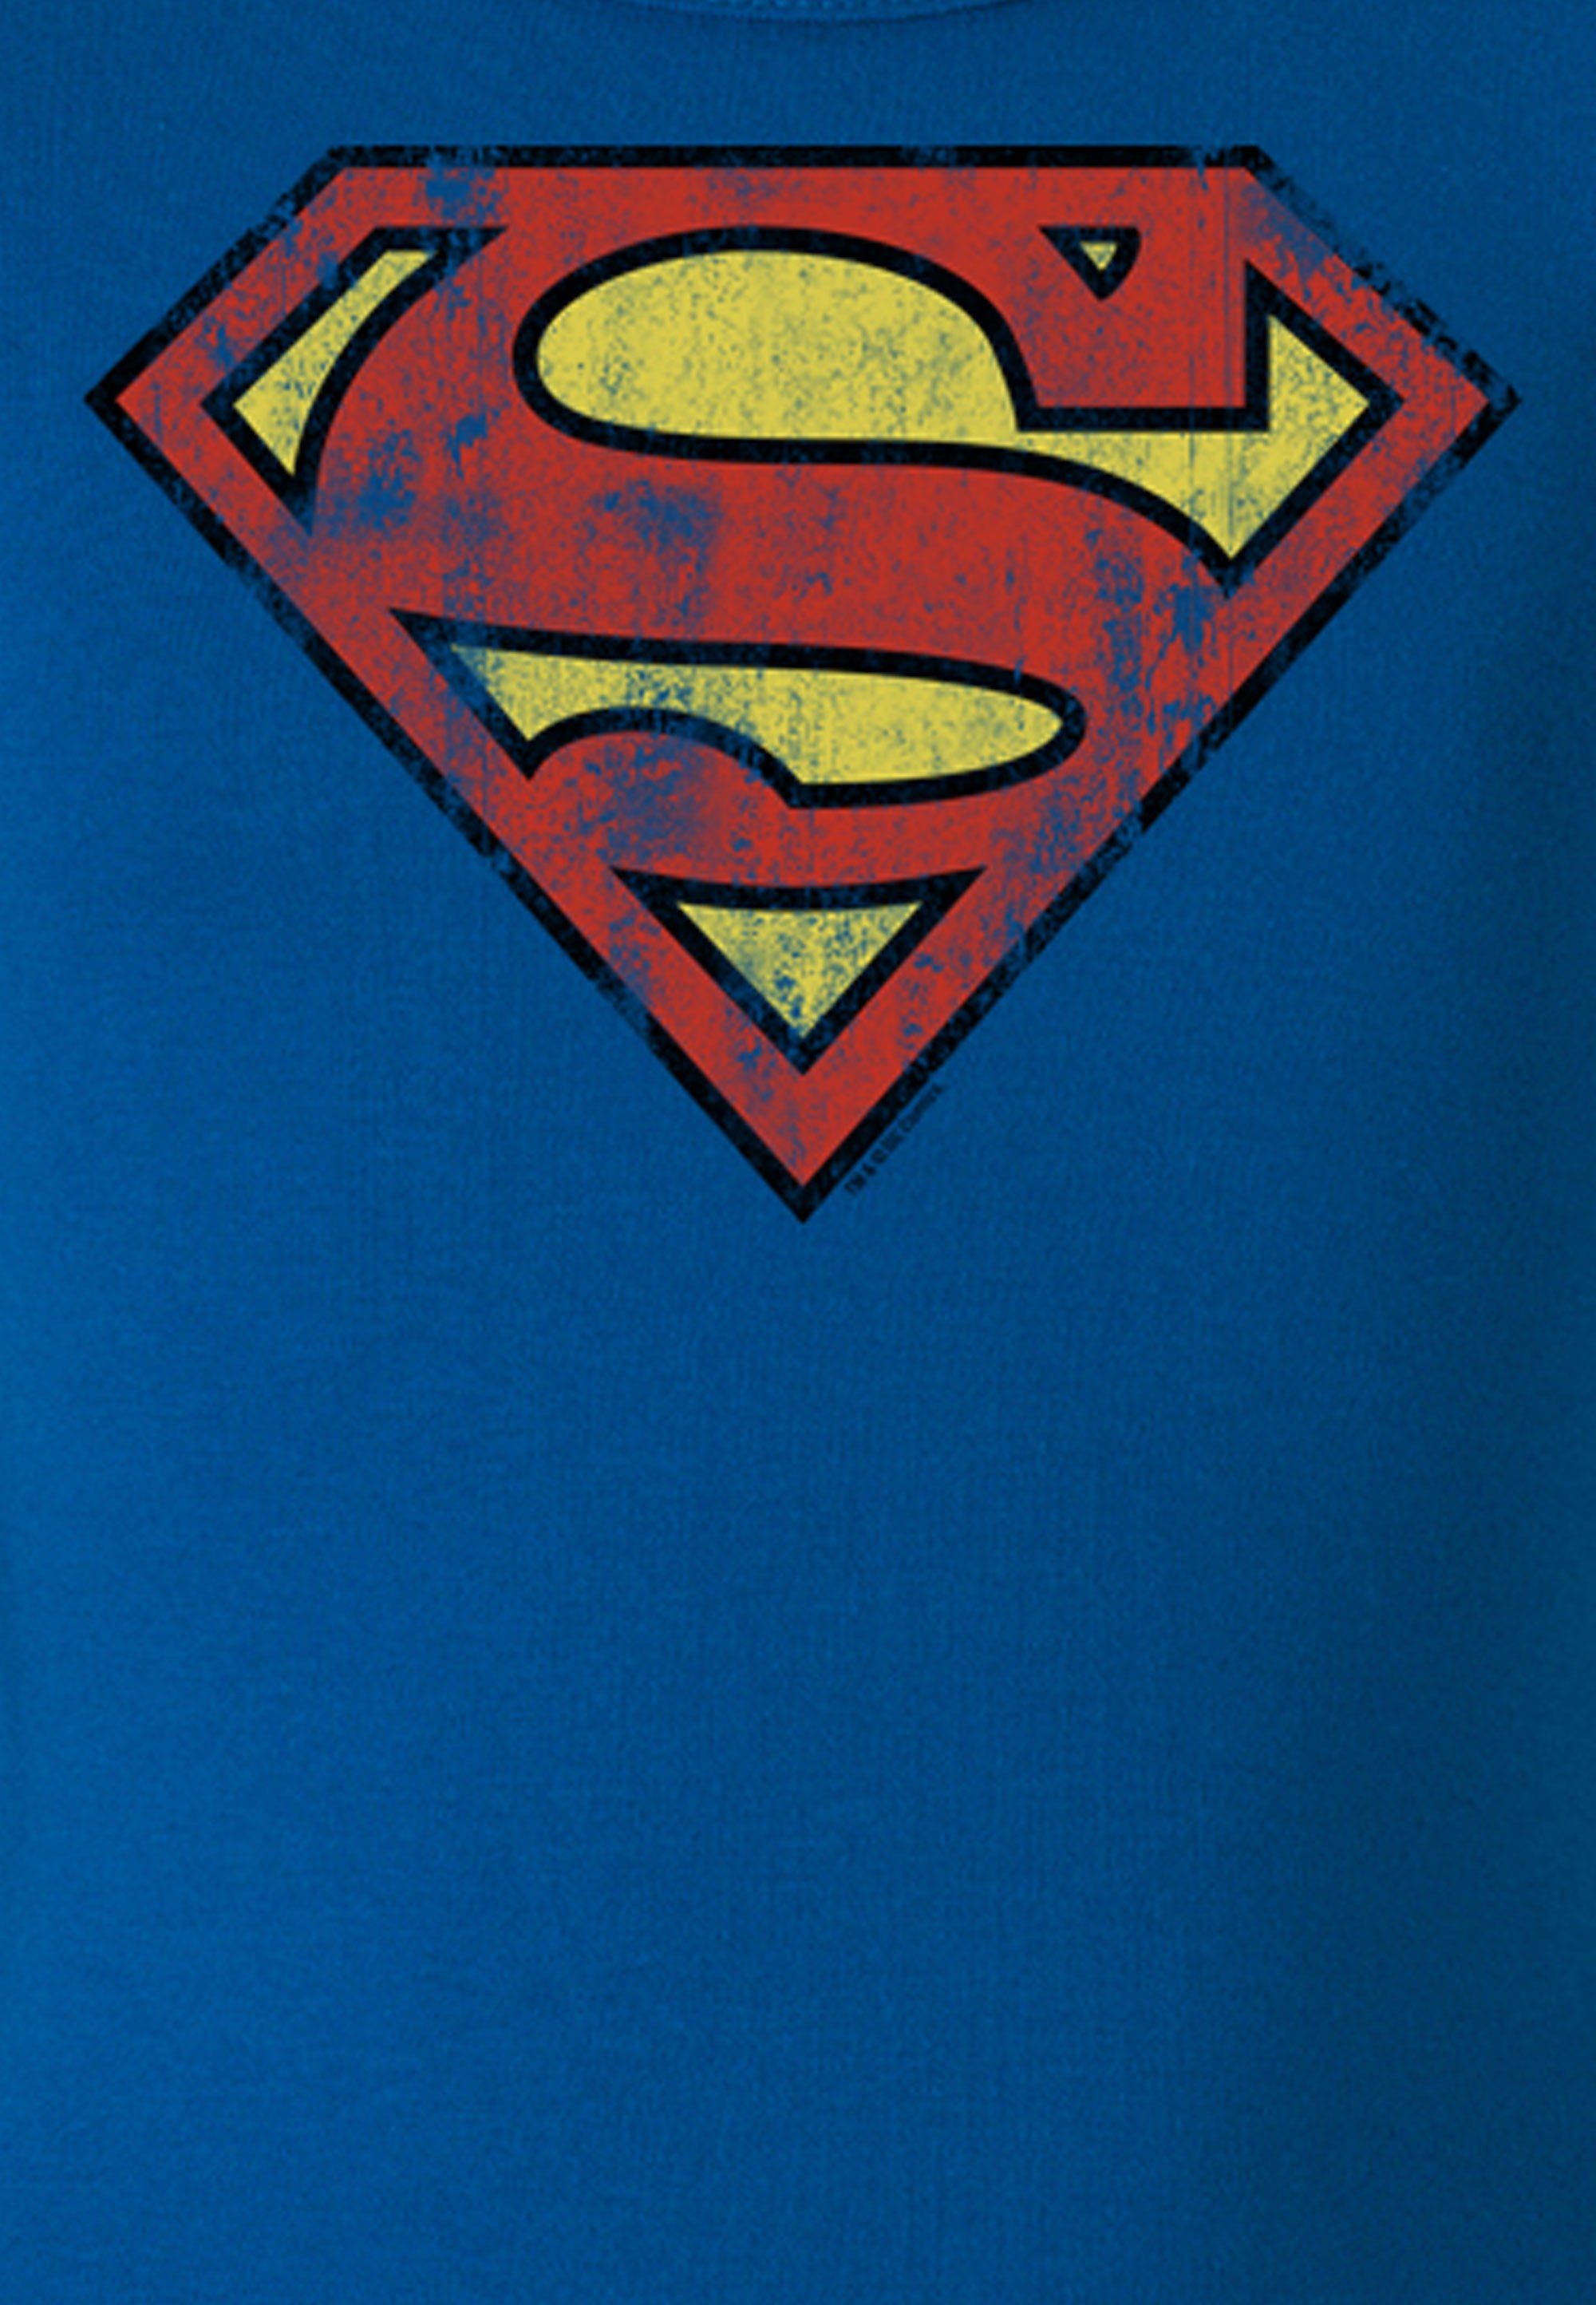 LOGOSHIRT T-Shirt Superman Frontprint mit tollem